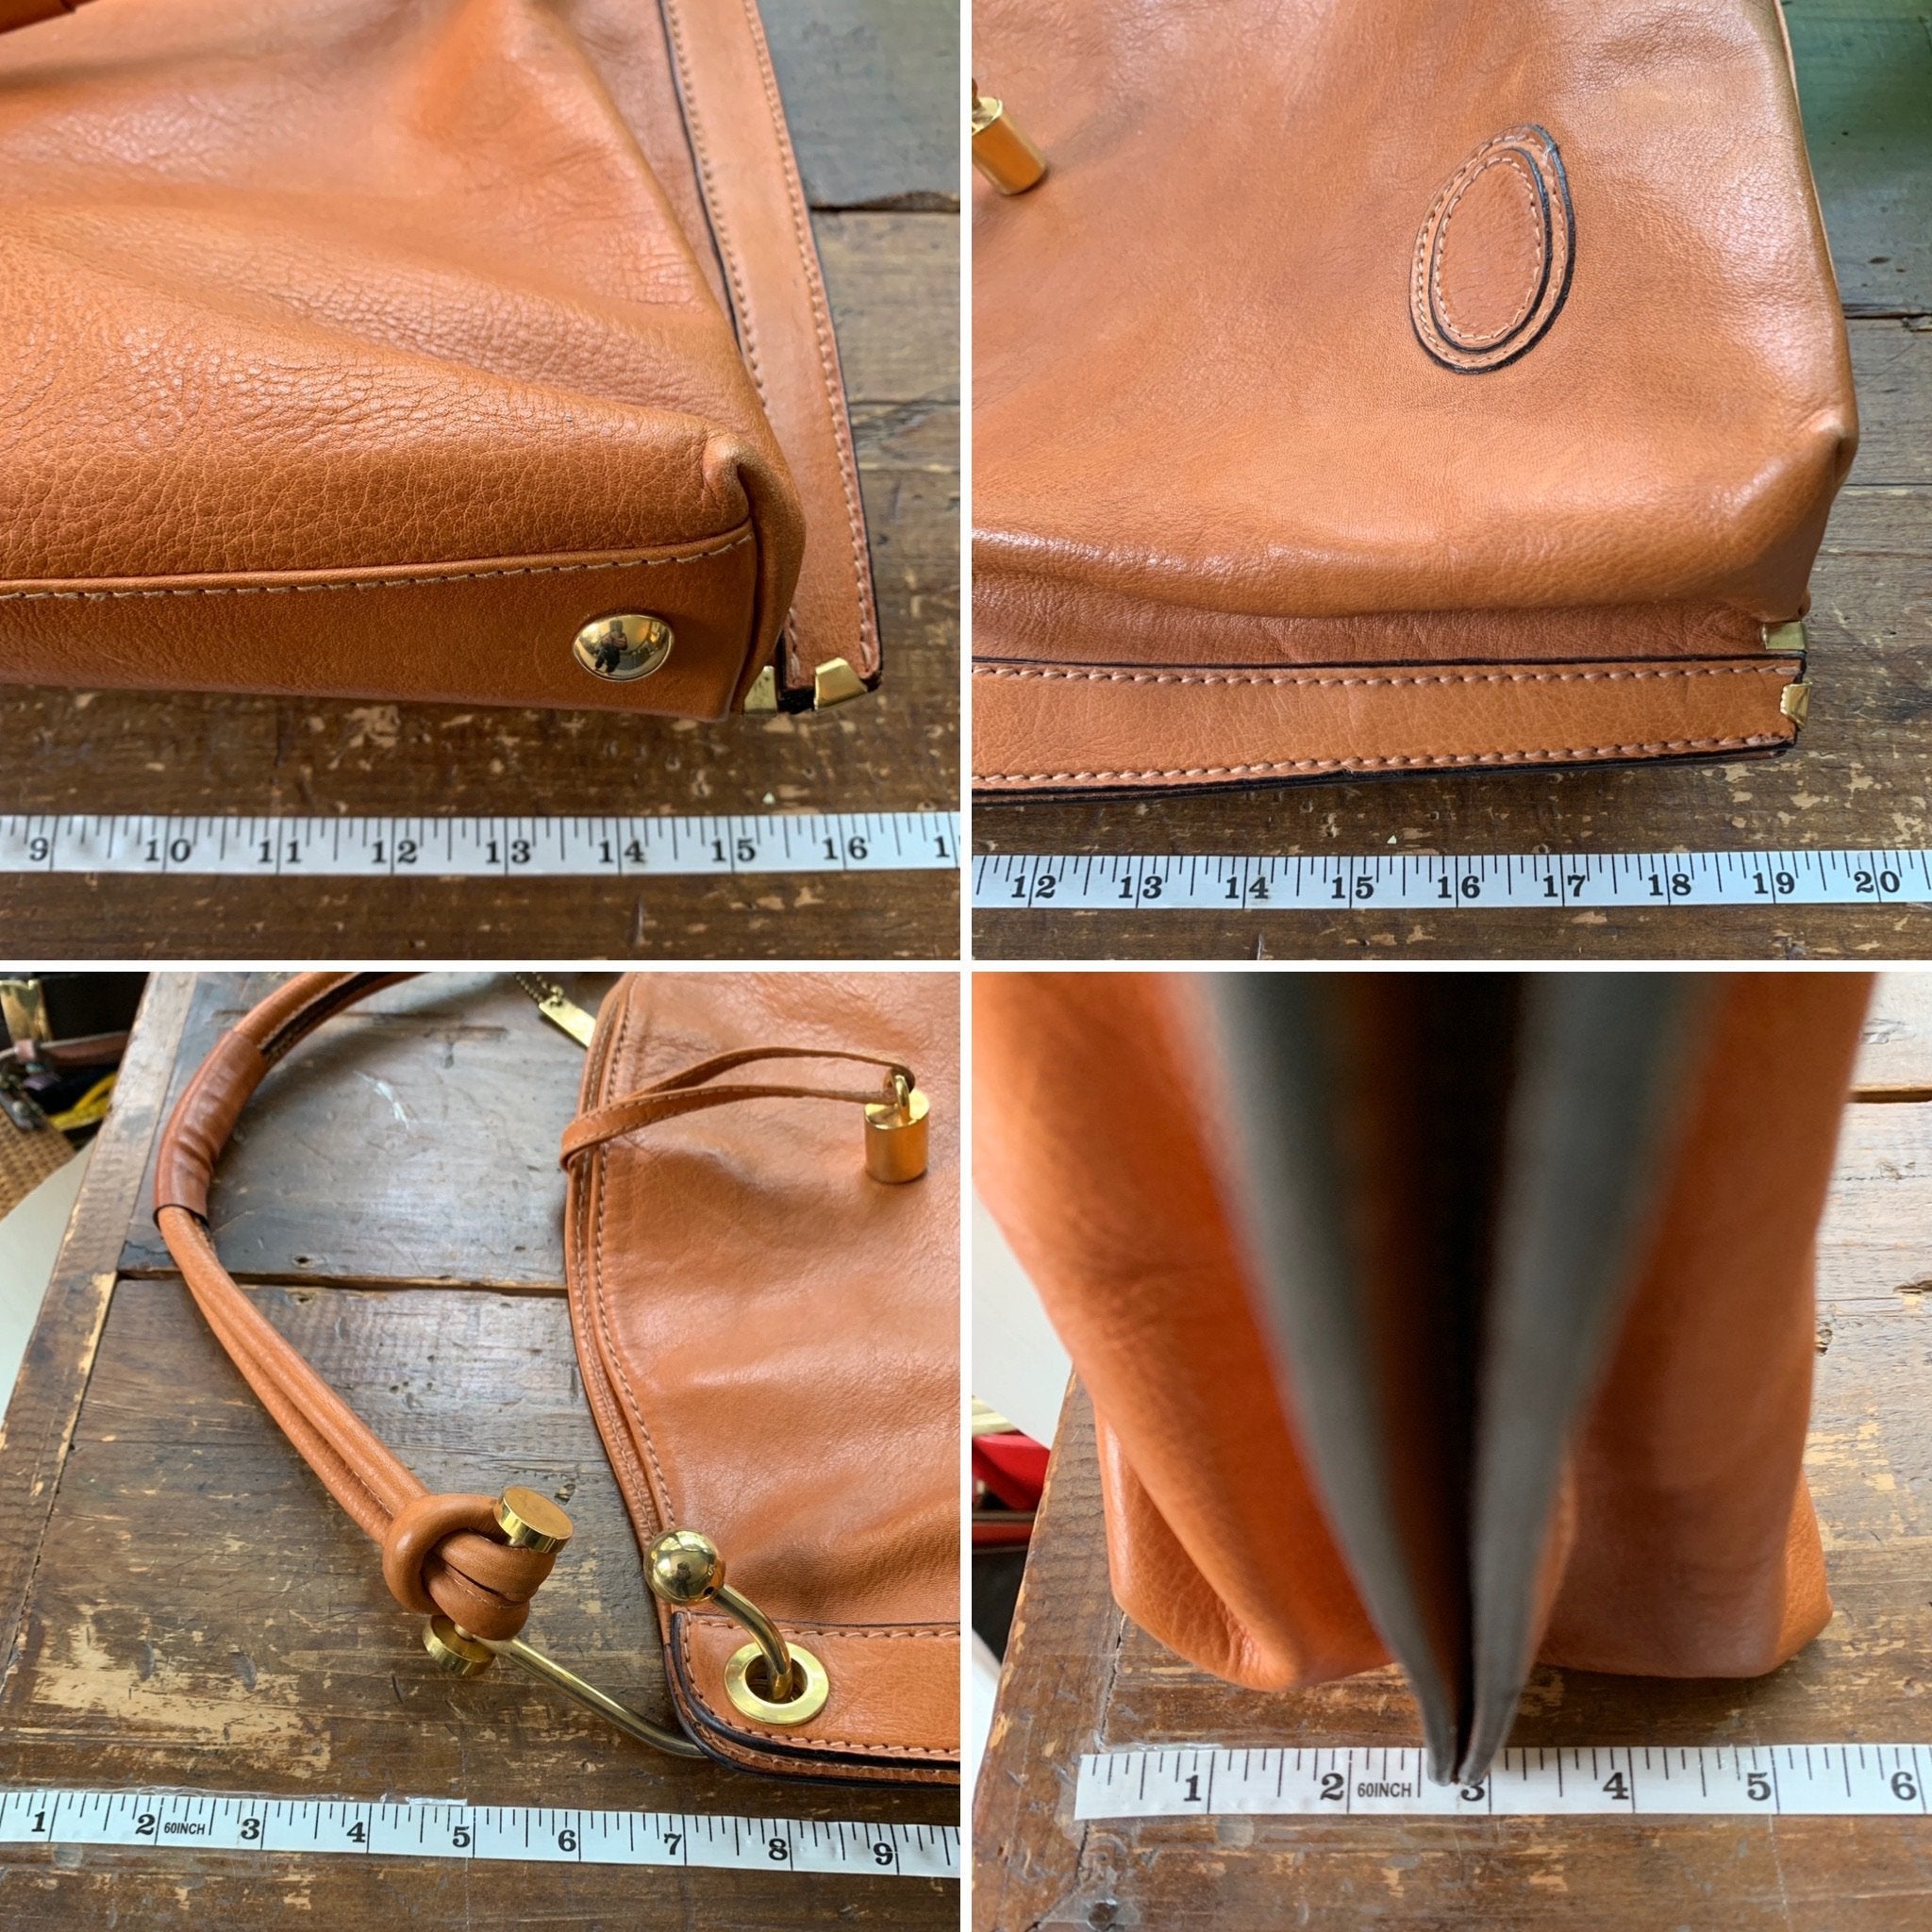 Antique Tooled Leather Purse Bat Design Art Nouveau Turnlock Bag Circa -  Ruby Lane